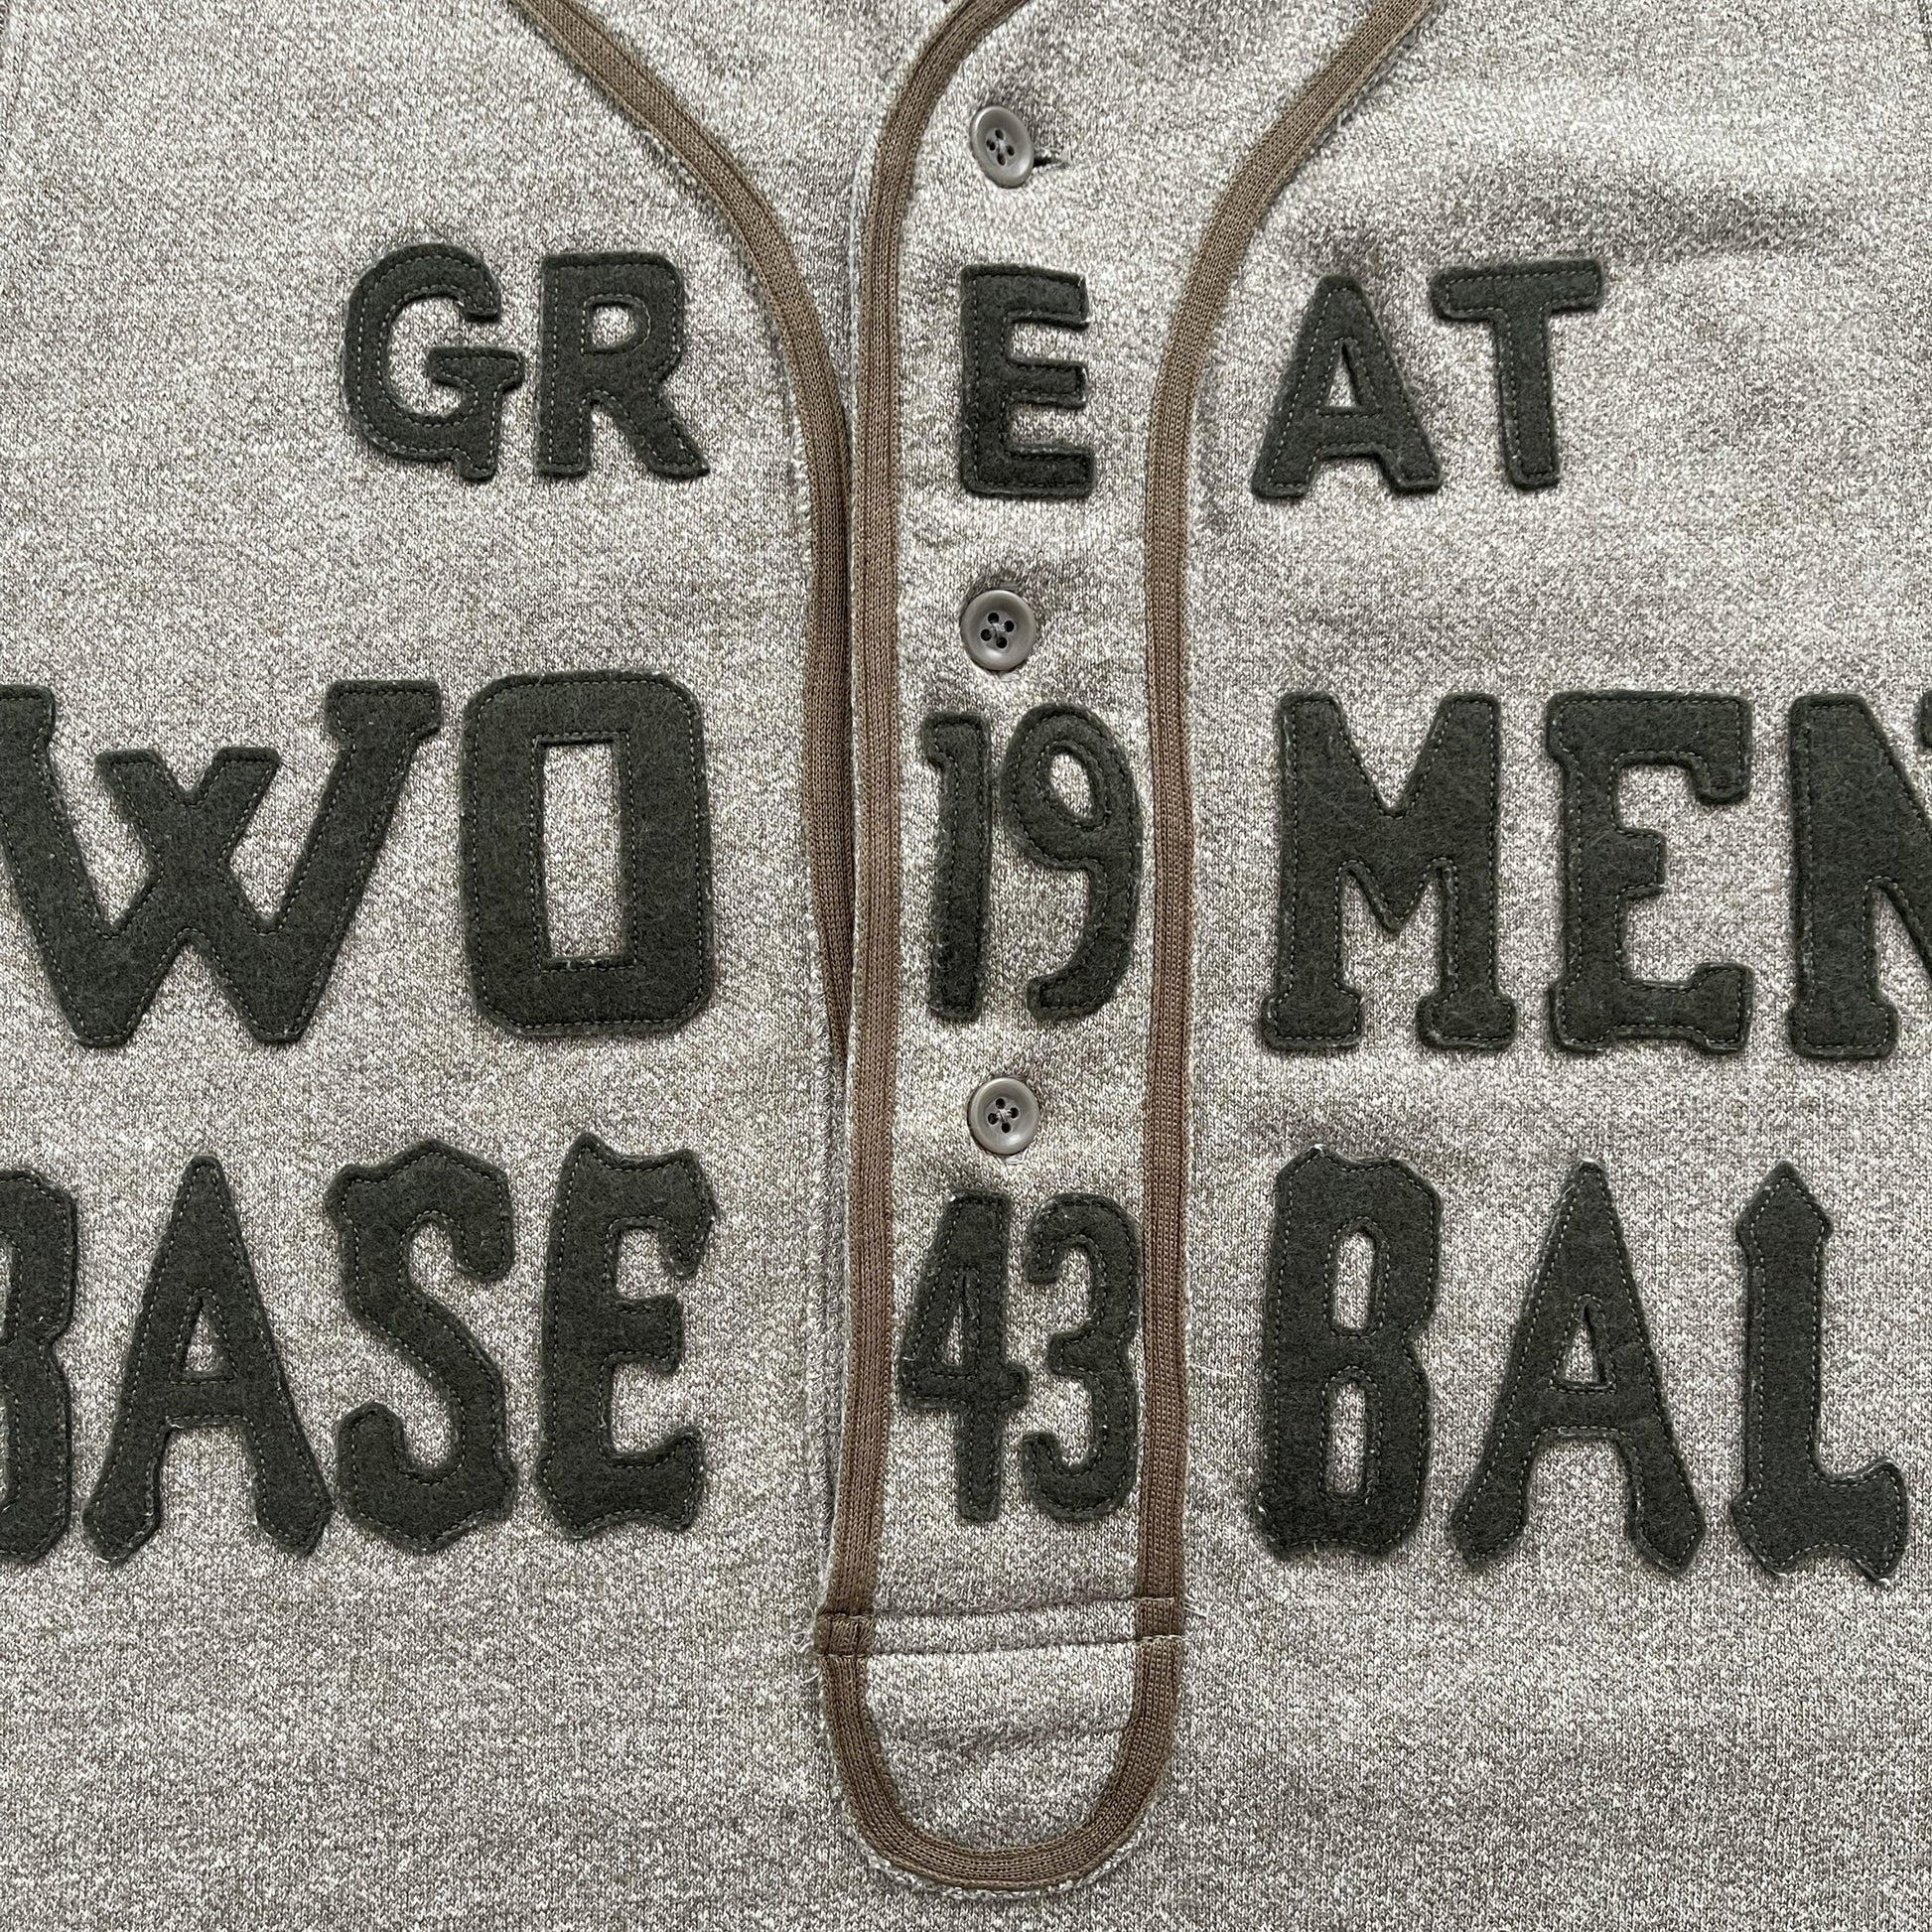 Kapital Great Women Baseball Henley Sweater Vest - Known Source